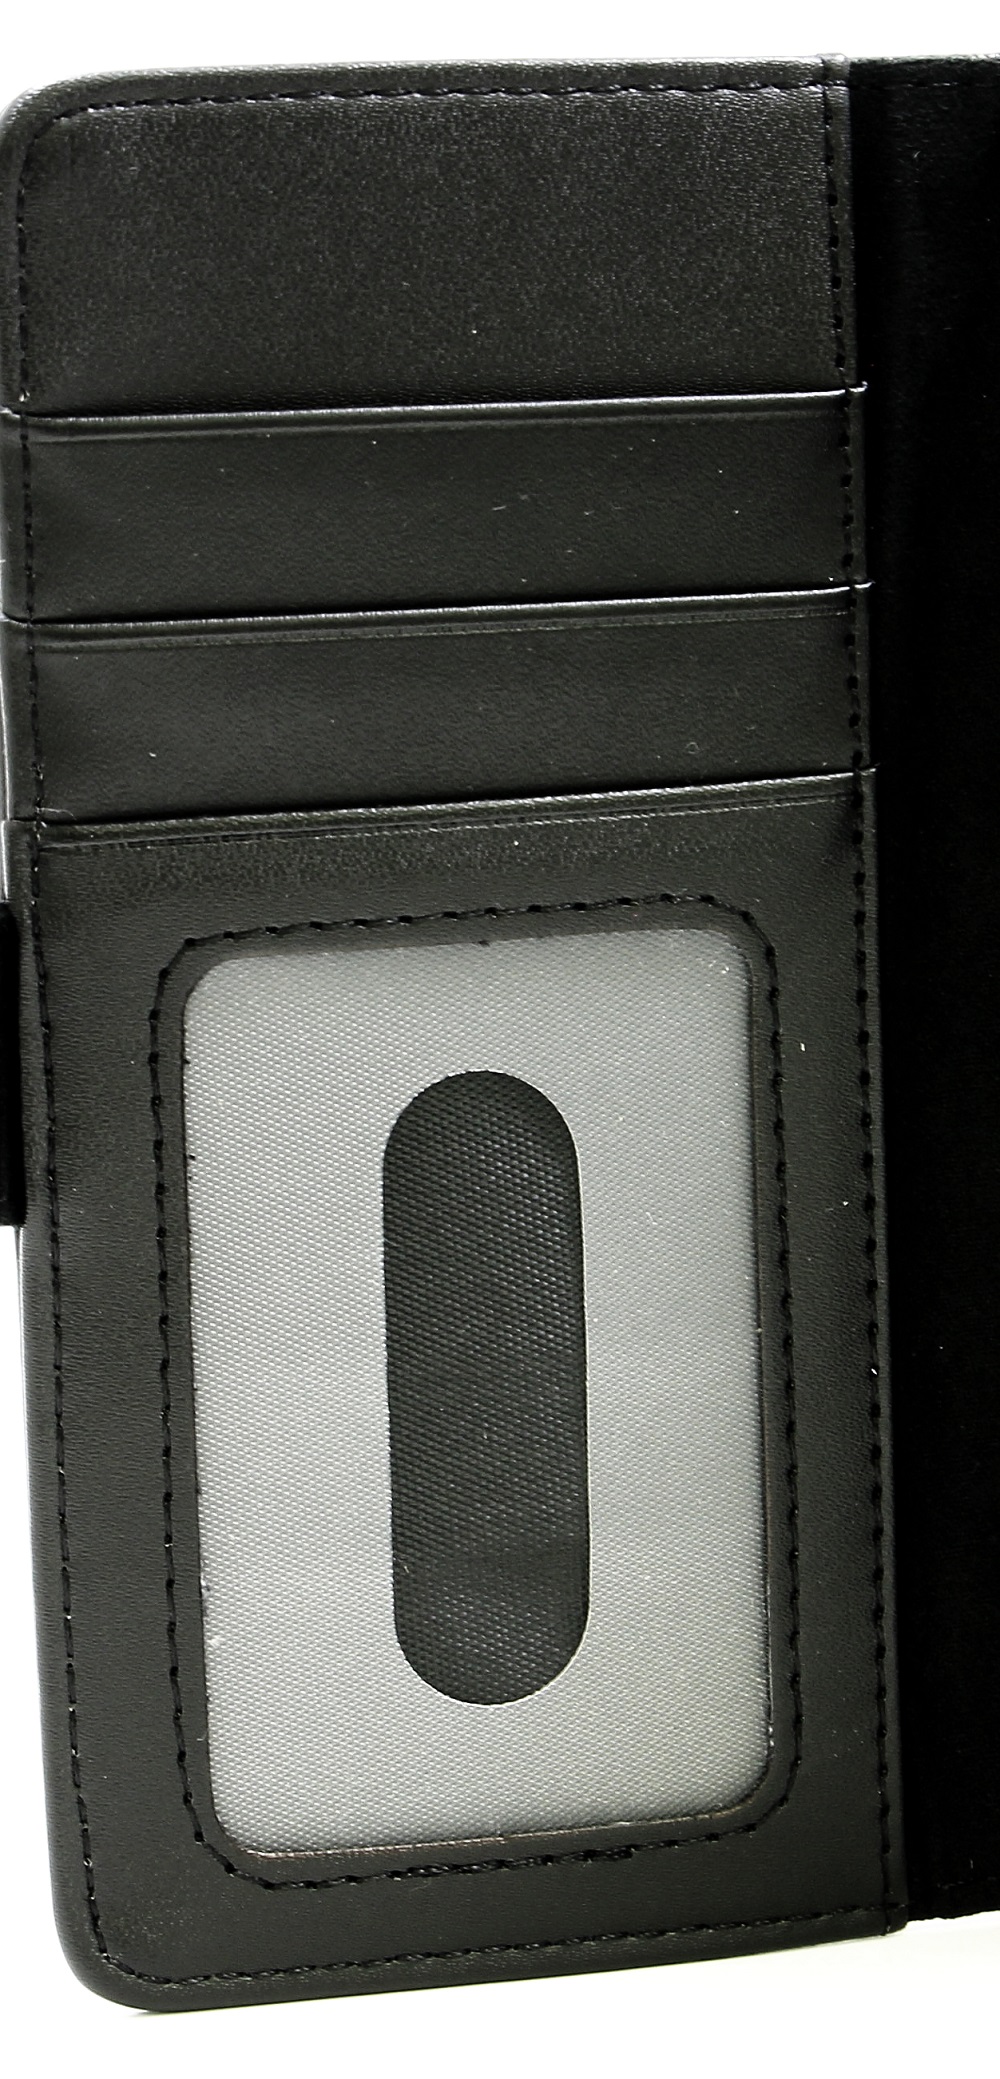 Mobiltaske Sony Xperia XZ1 Compact (G8441)